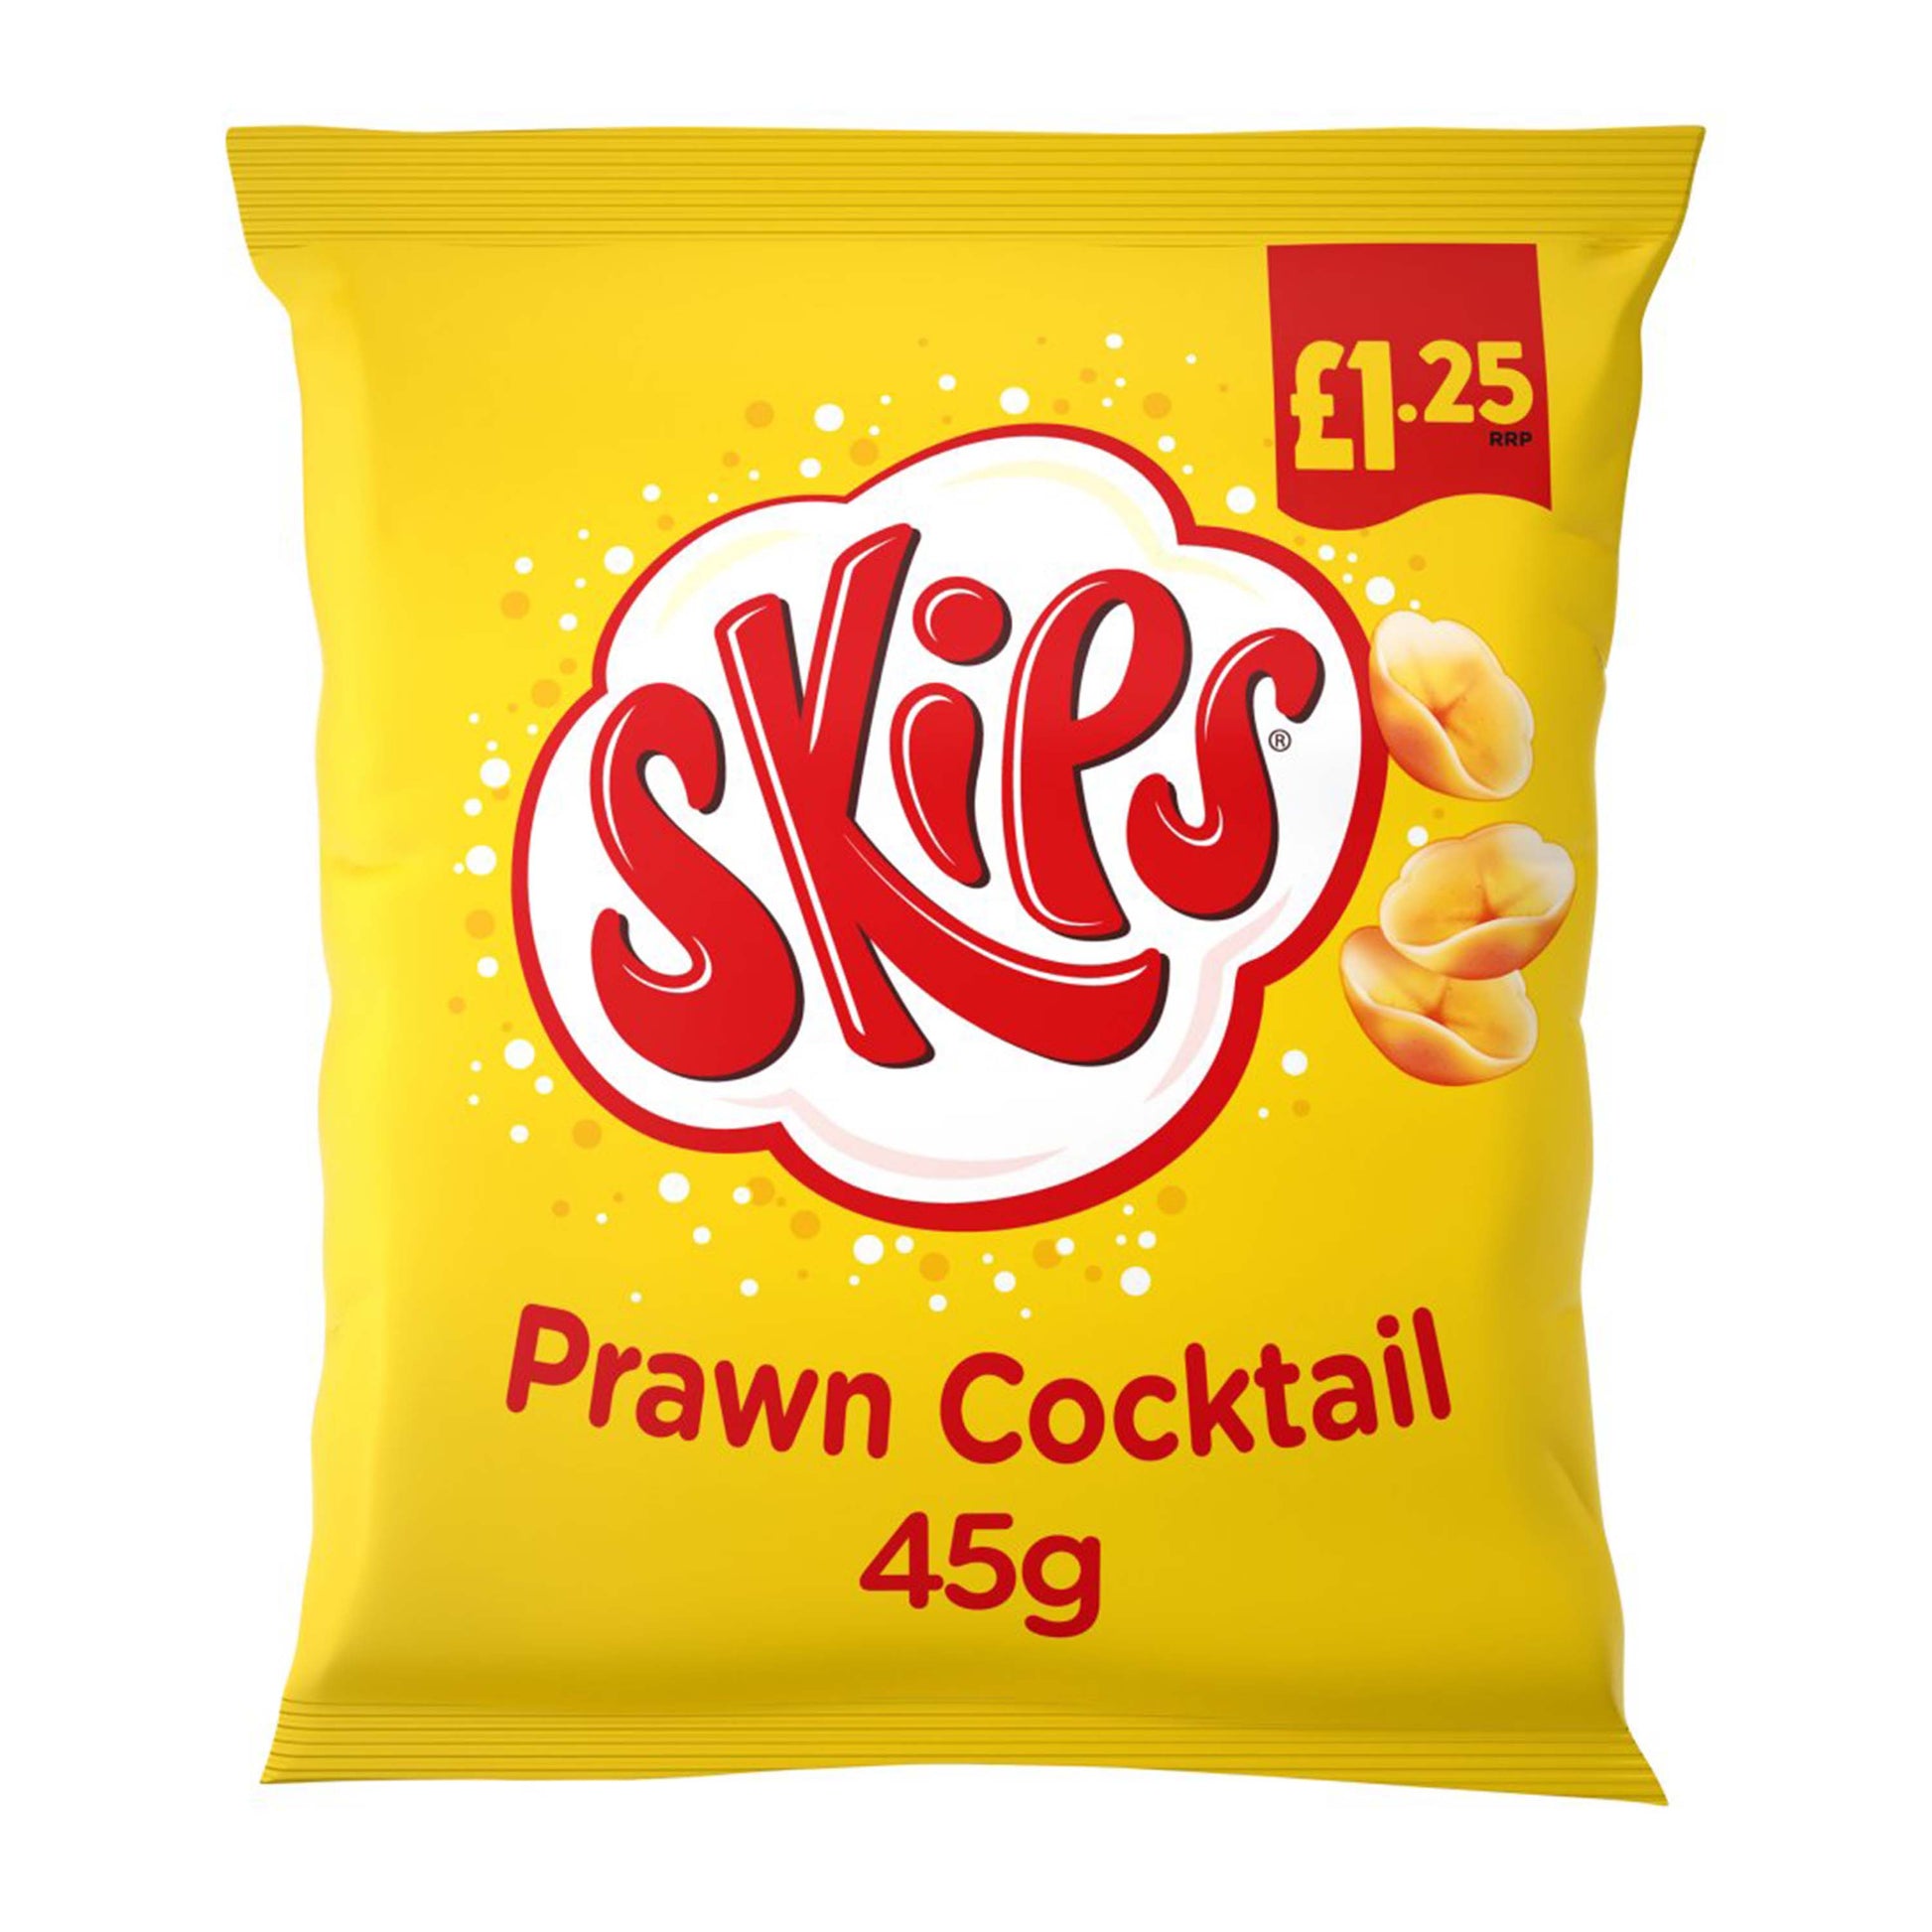 Skips Prawn Cocktail 45g – (£1.25 Bag) - BRITISH SNACKS